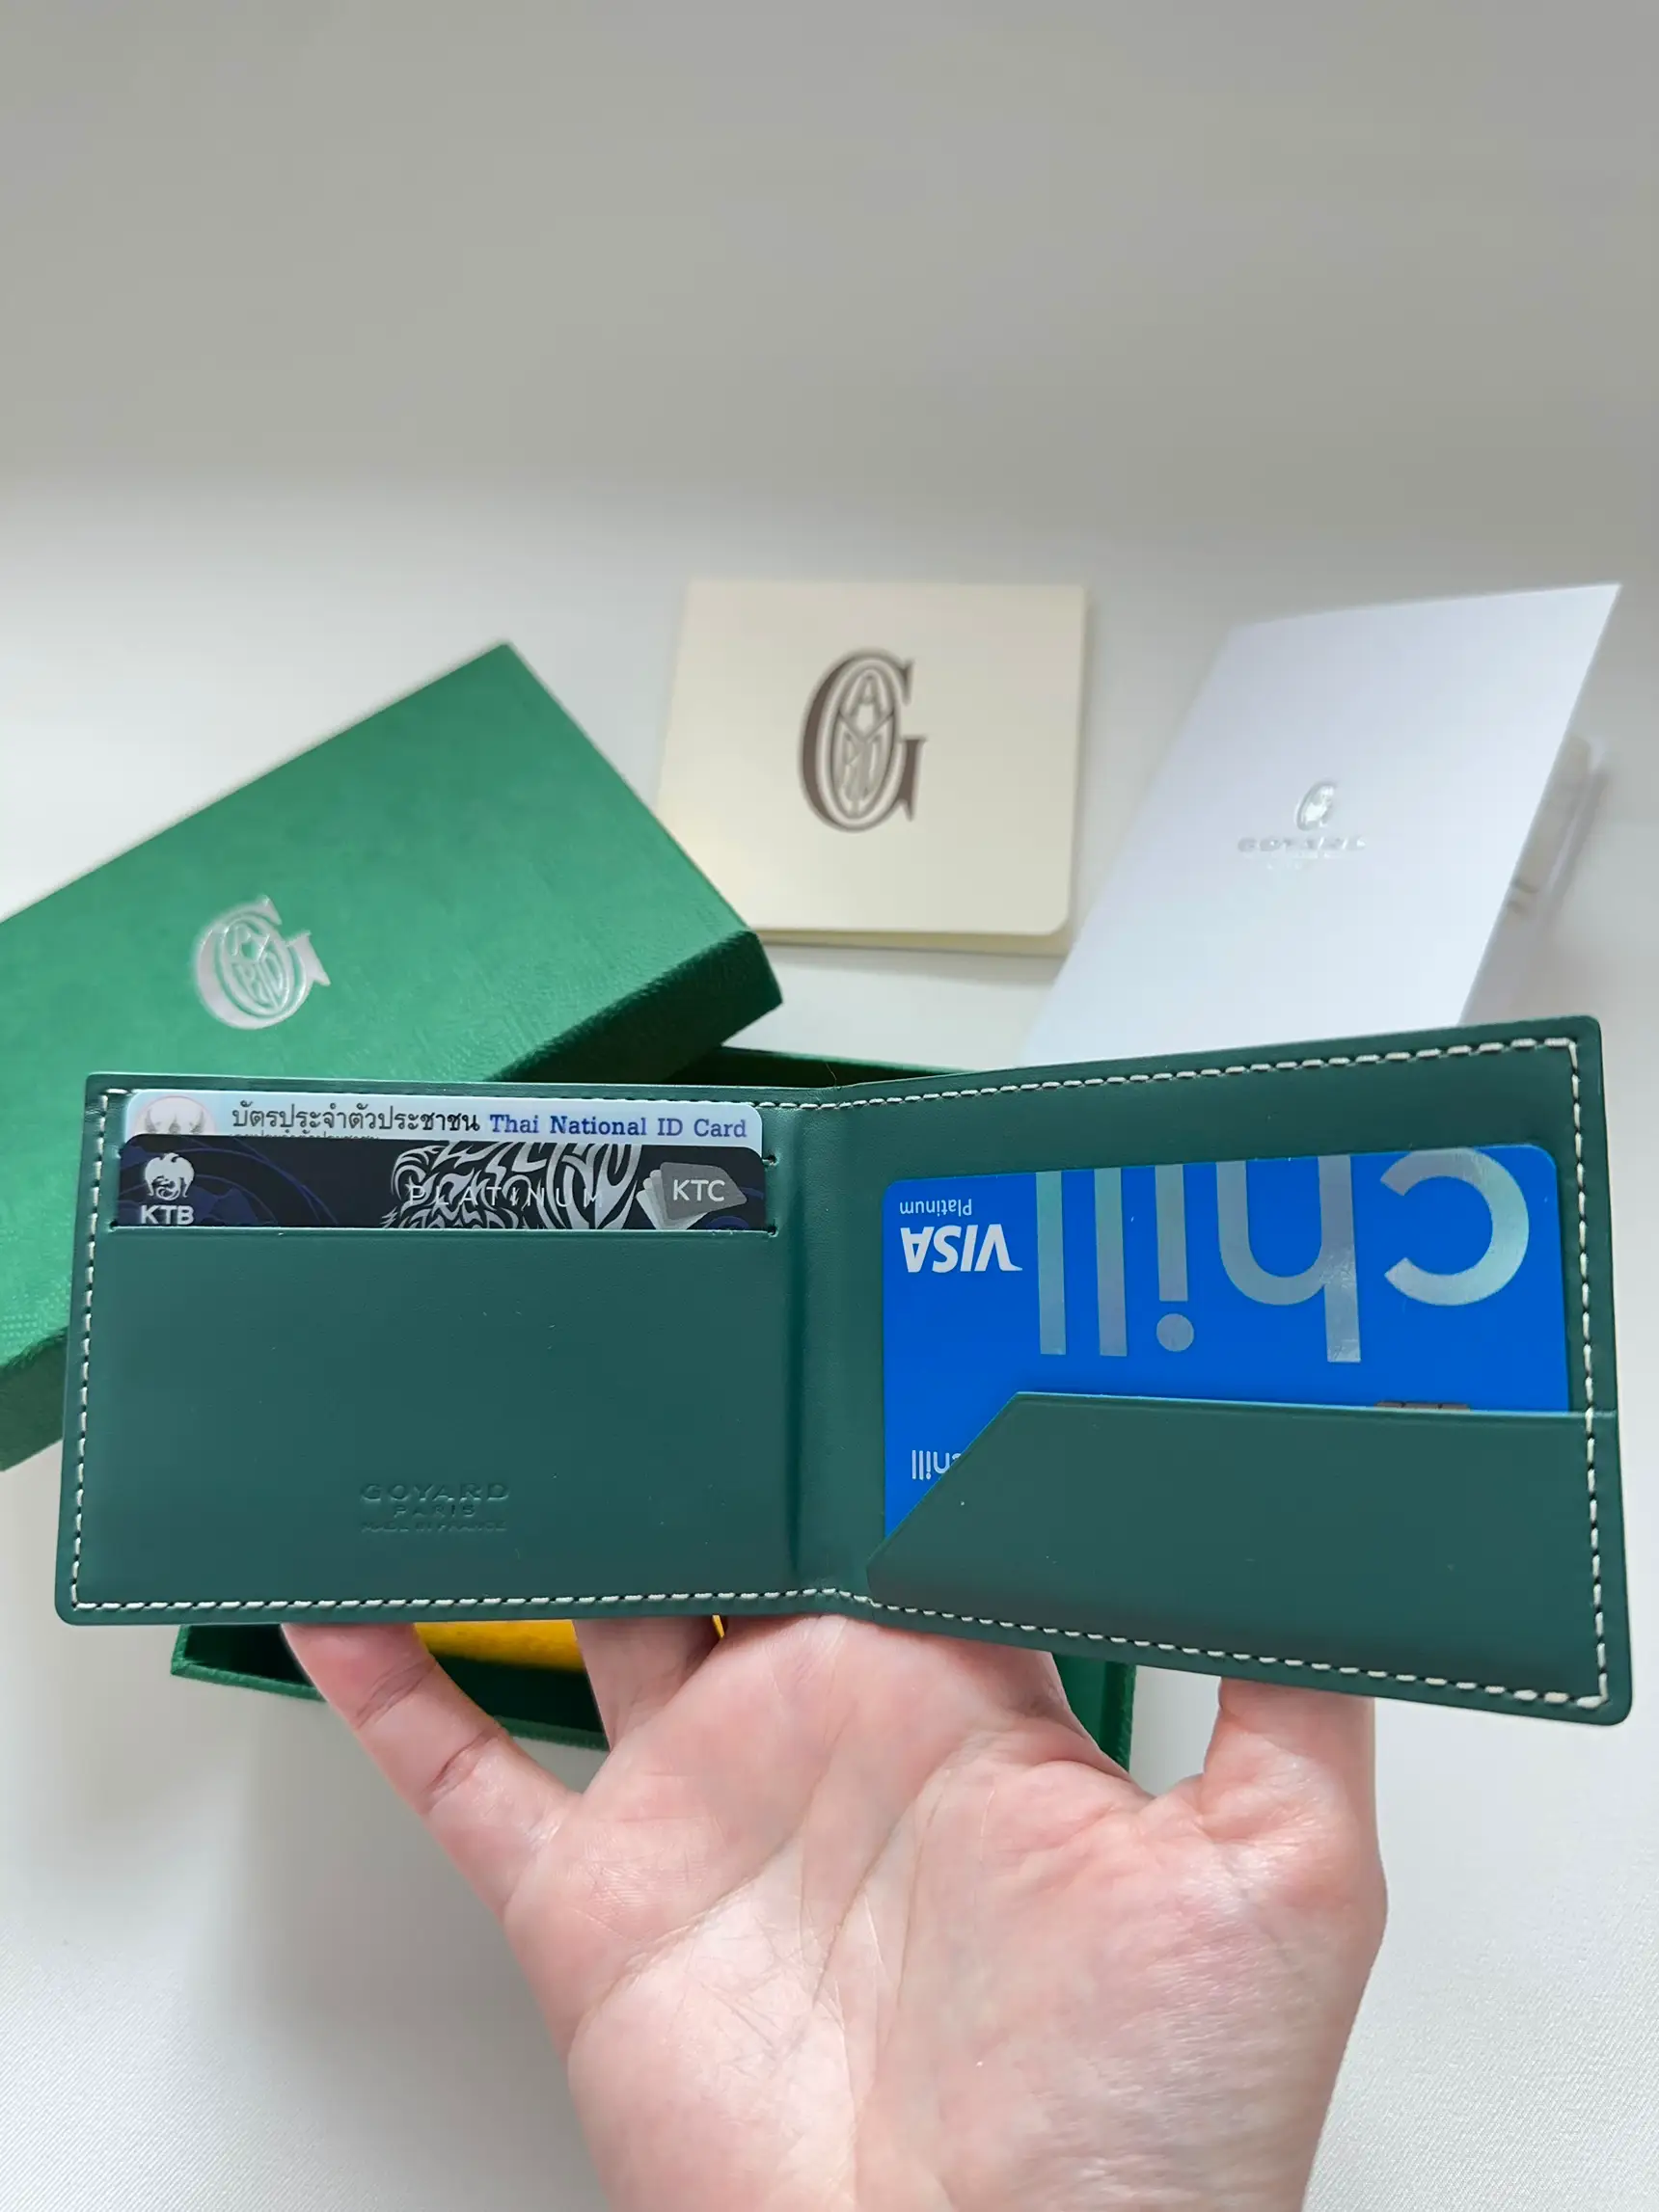 Goyard Porte-Cartes Insert Card Wallet